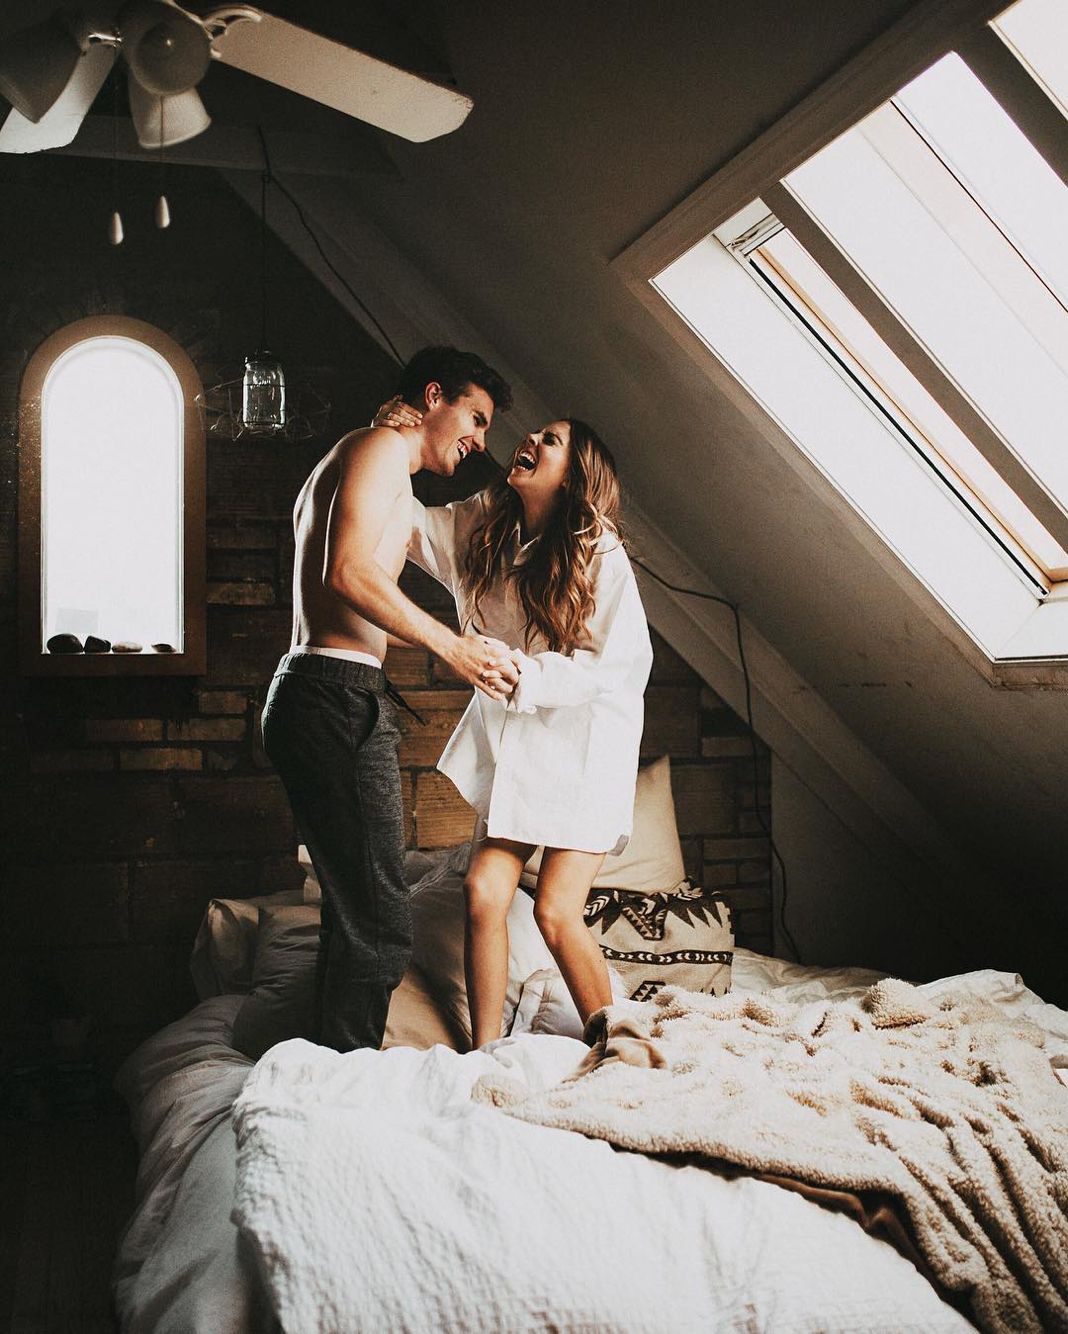 andie kline recommends Couple Bedroom Photoshoot Ideas